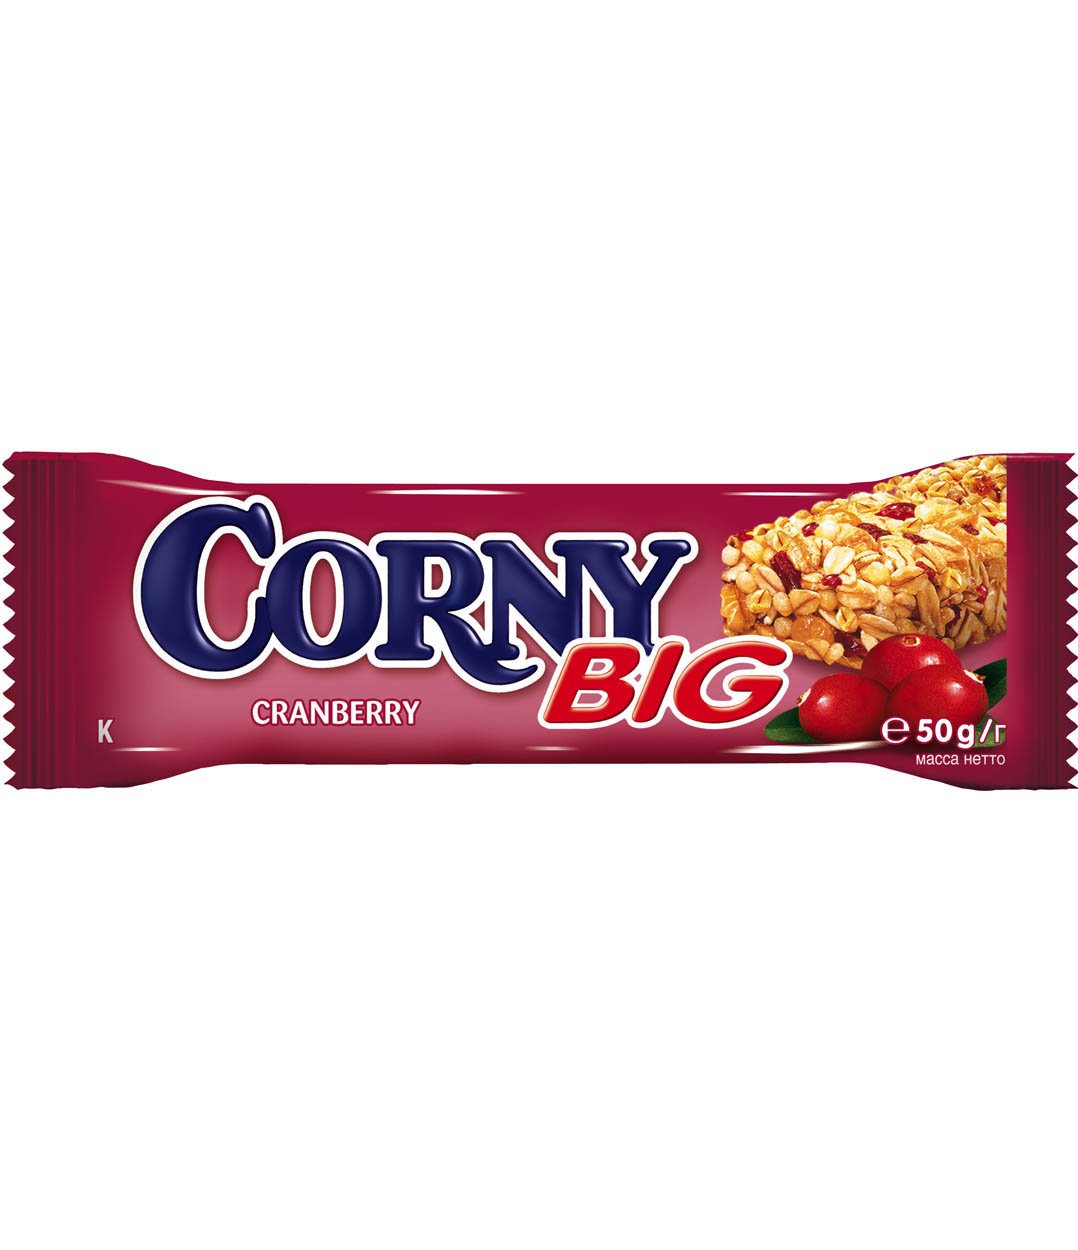  Corny Big   